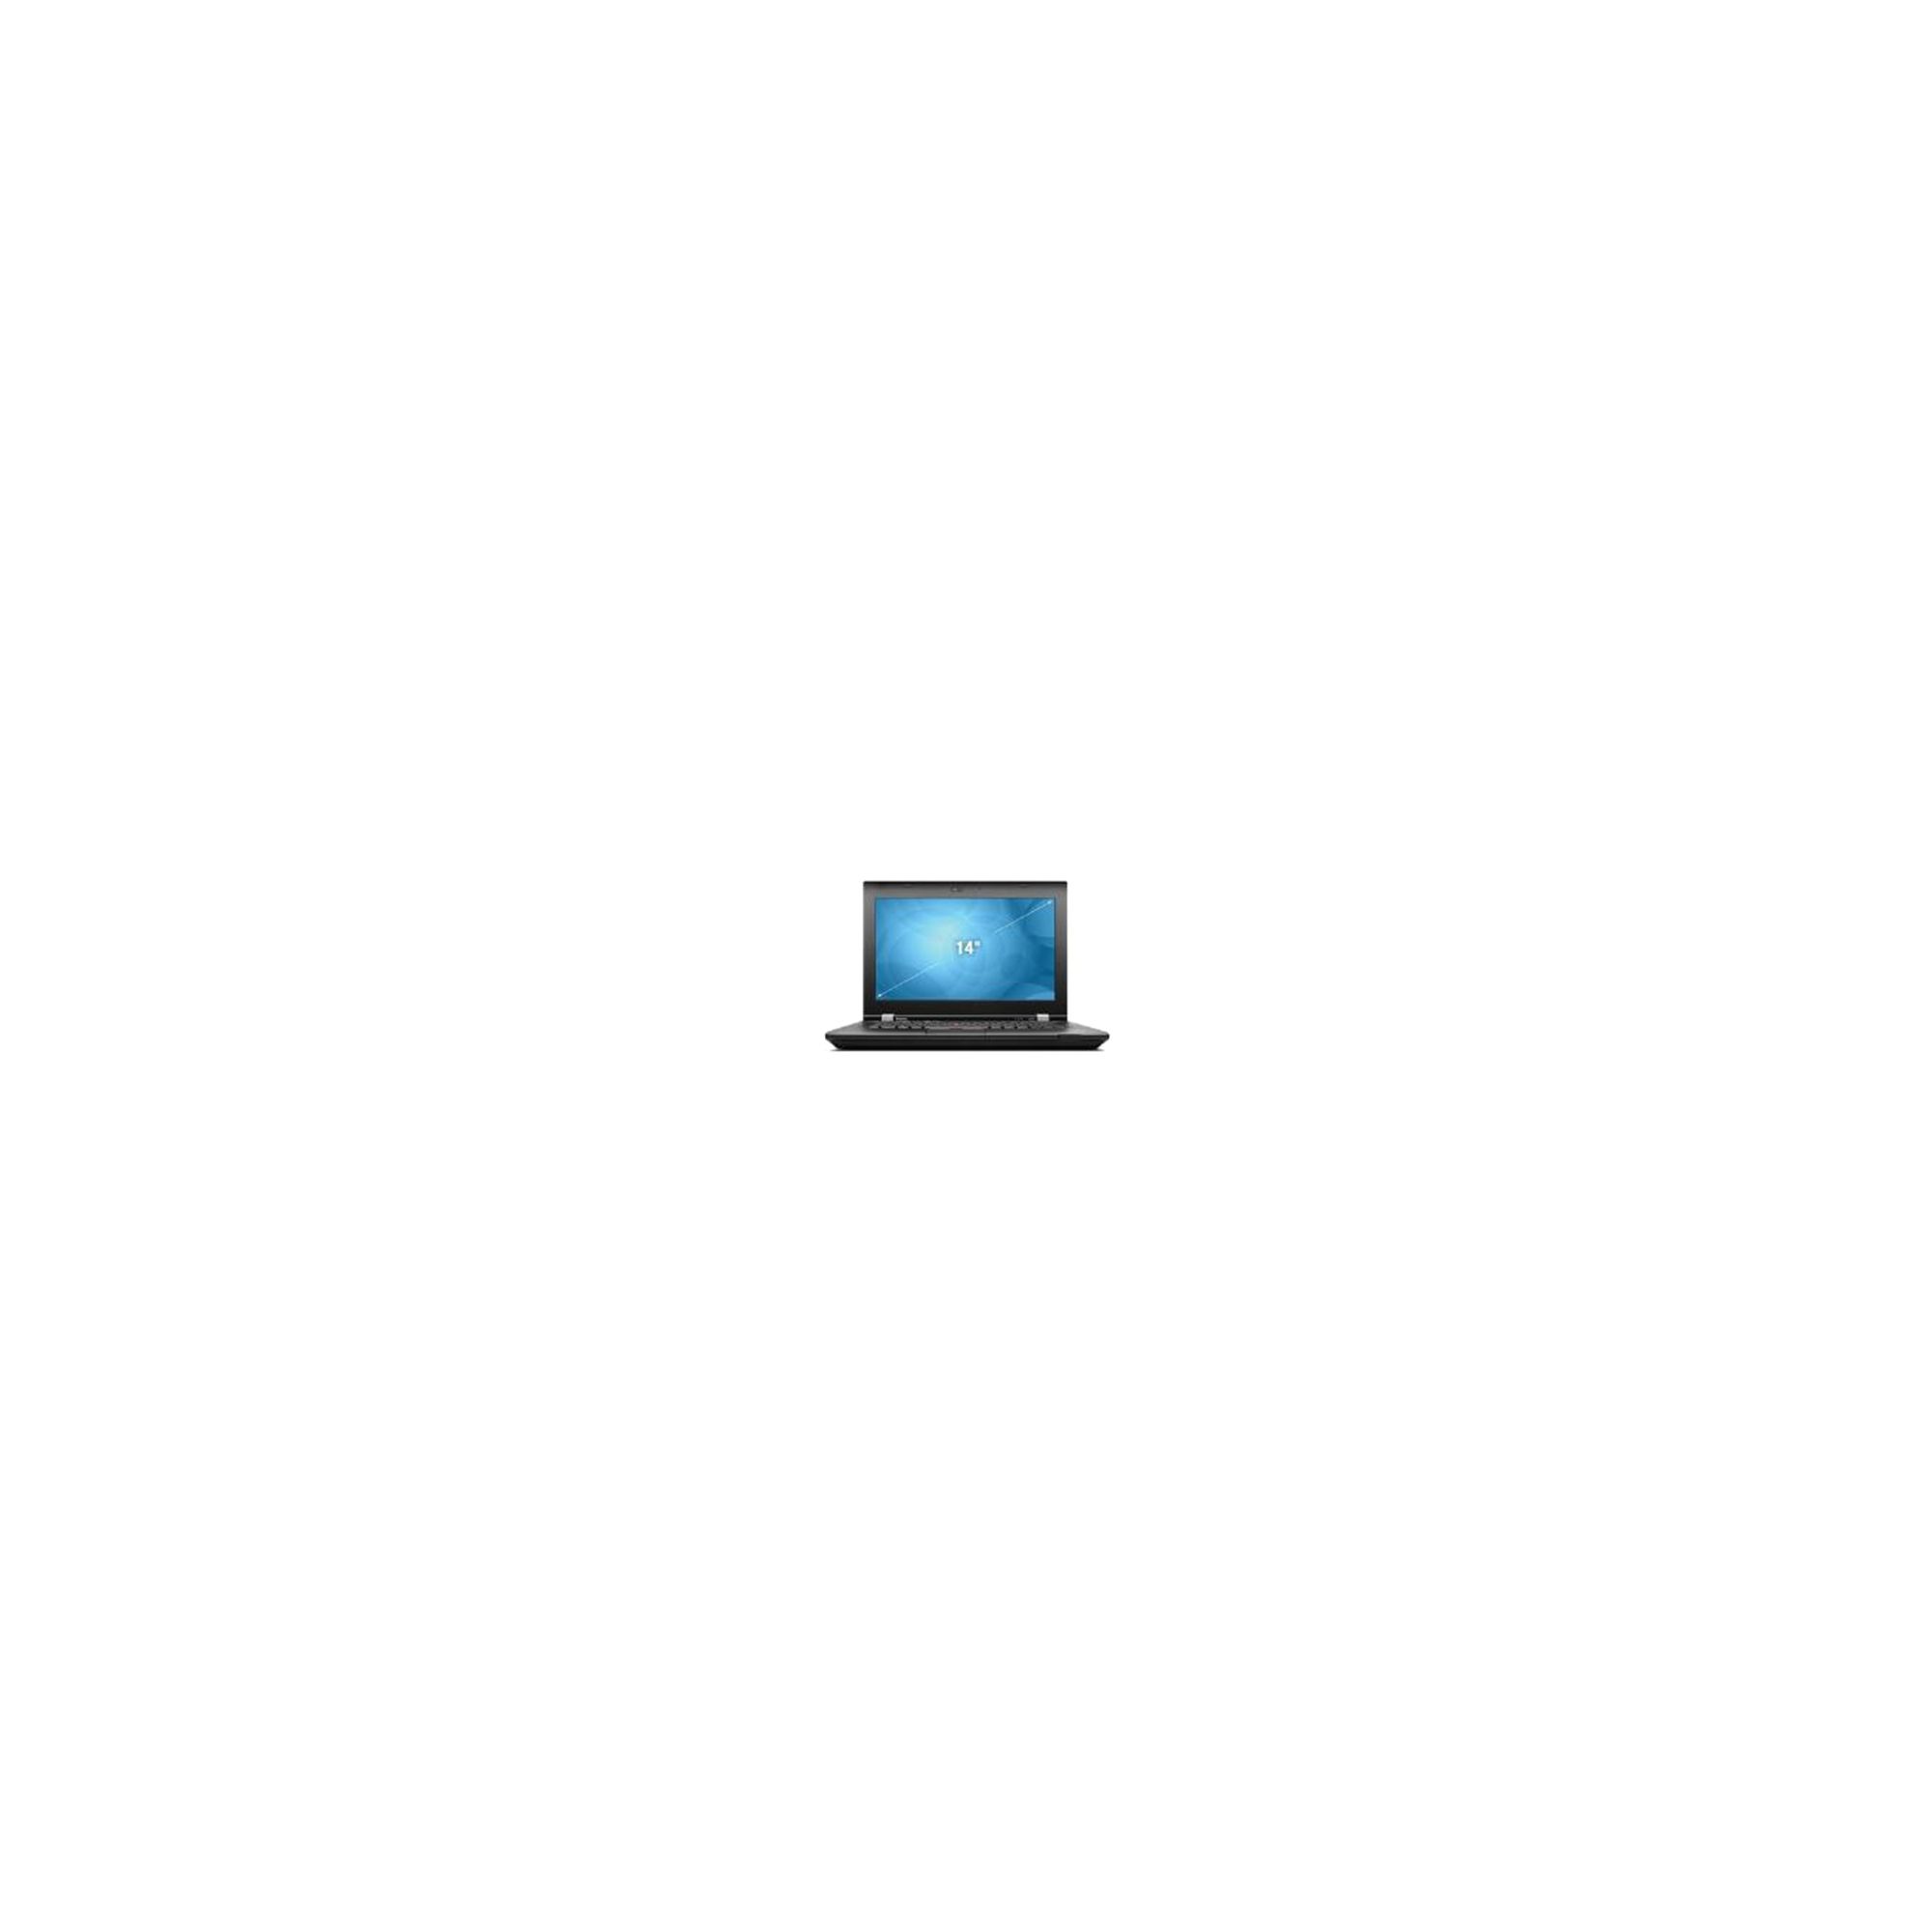 Lenovo ThinkPad L430 246834G (14.0 inch) Notebook Core i3 (2370M) 2.4GHz 4GB 500GB DVD±RW WLAN BT Webcam Windows 7 Pro 64-bit (Intel HD Graphics) at Tesco Direct